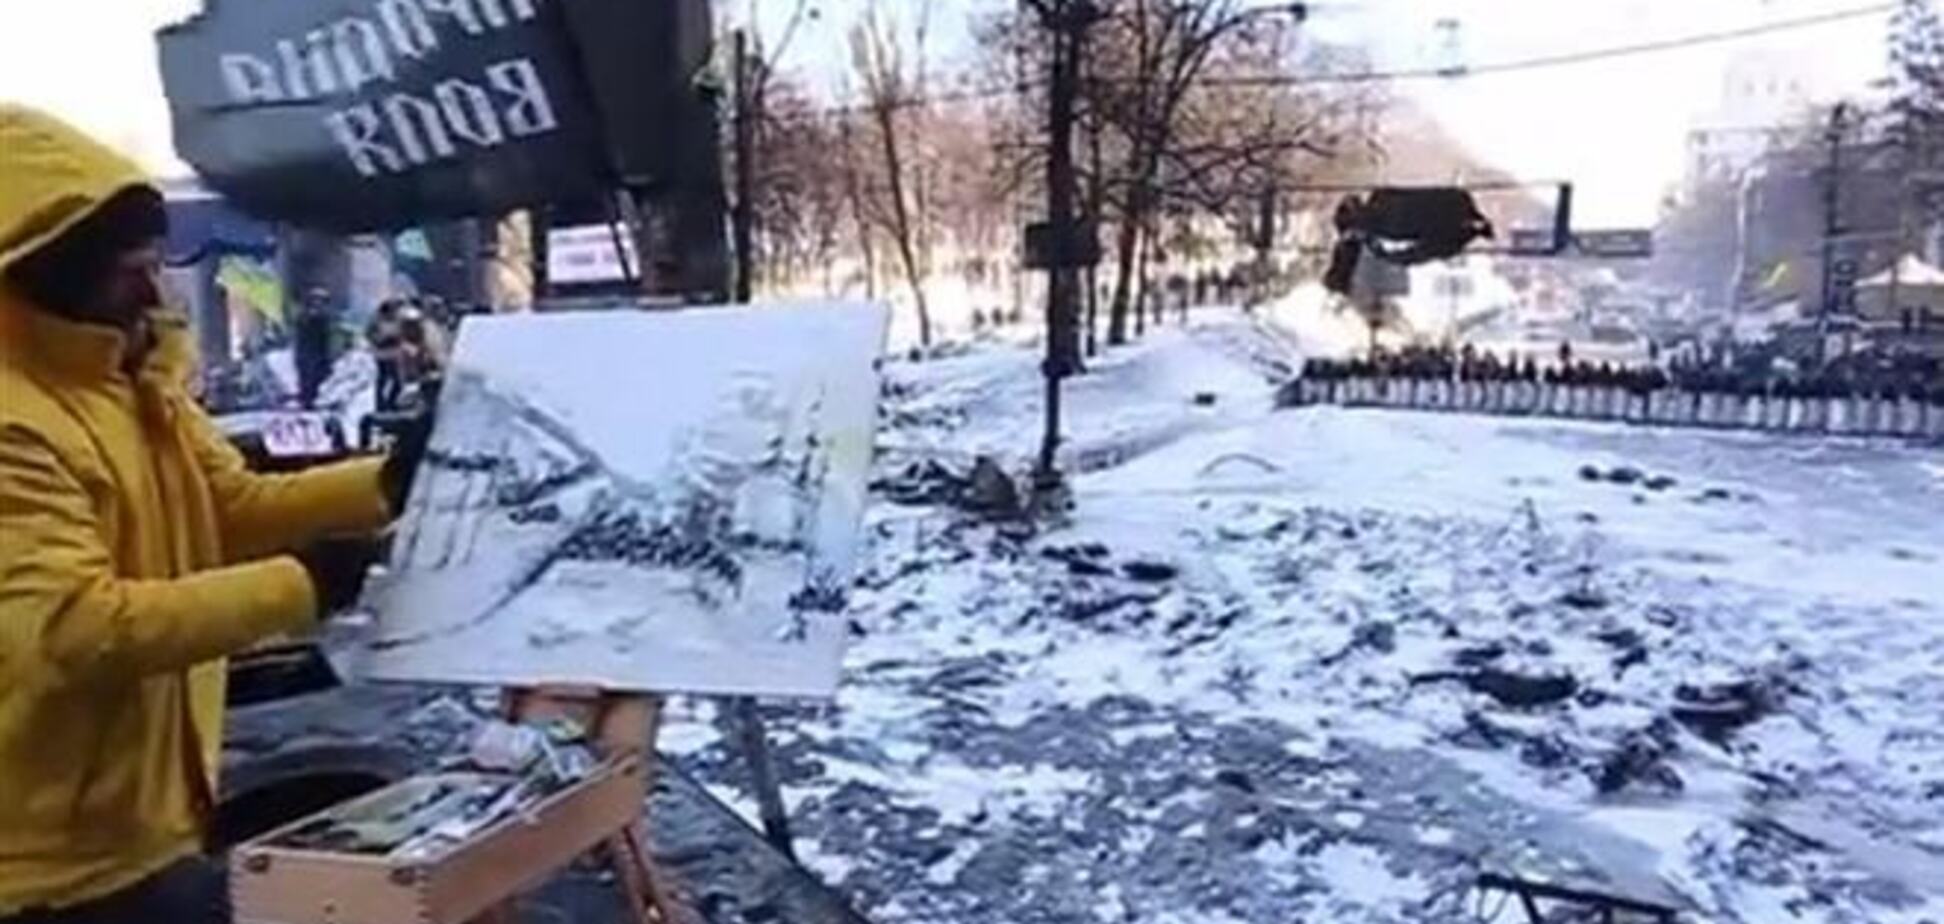 Художники рисуют на Грушевского пейзажи с кордонами милиции